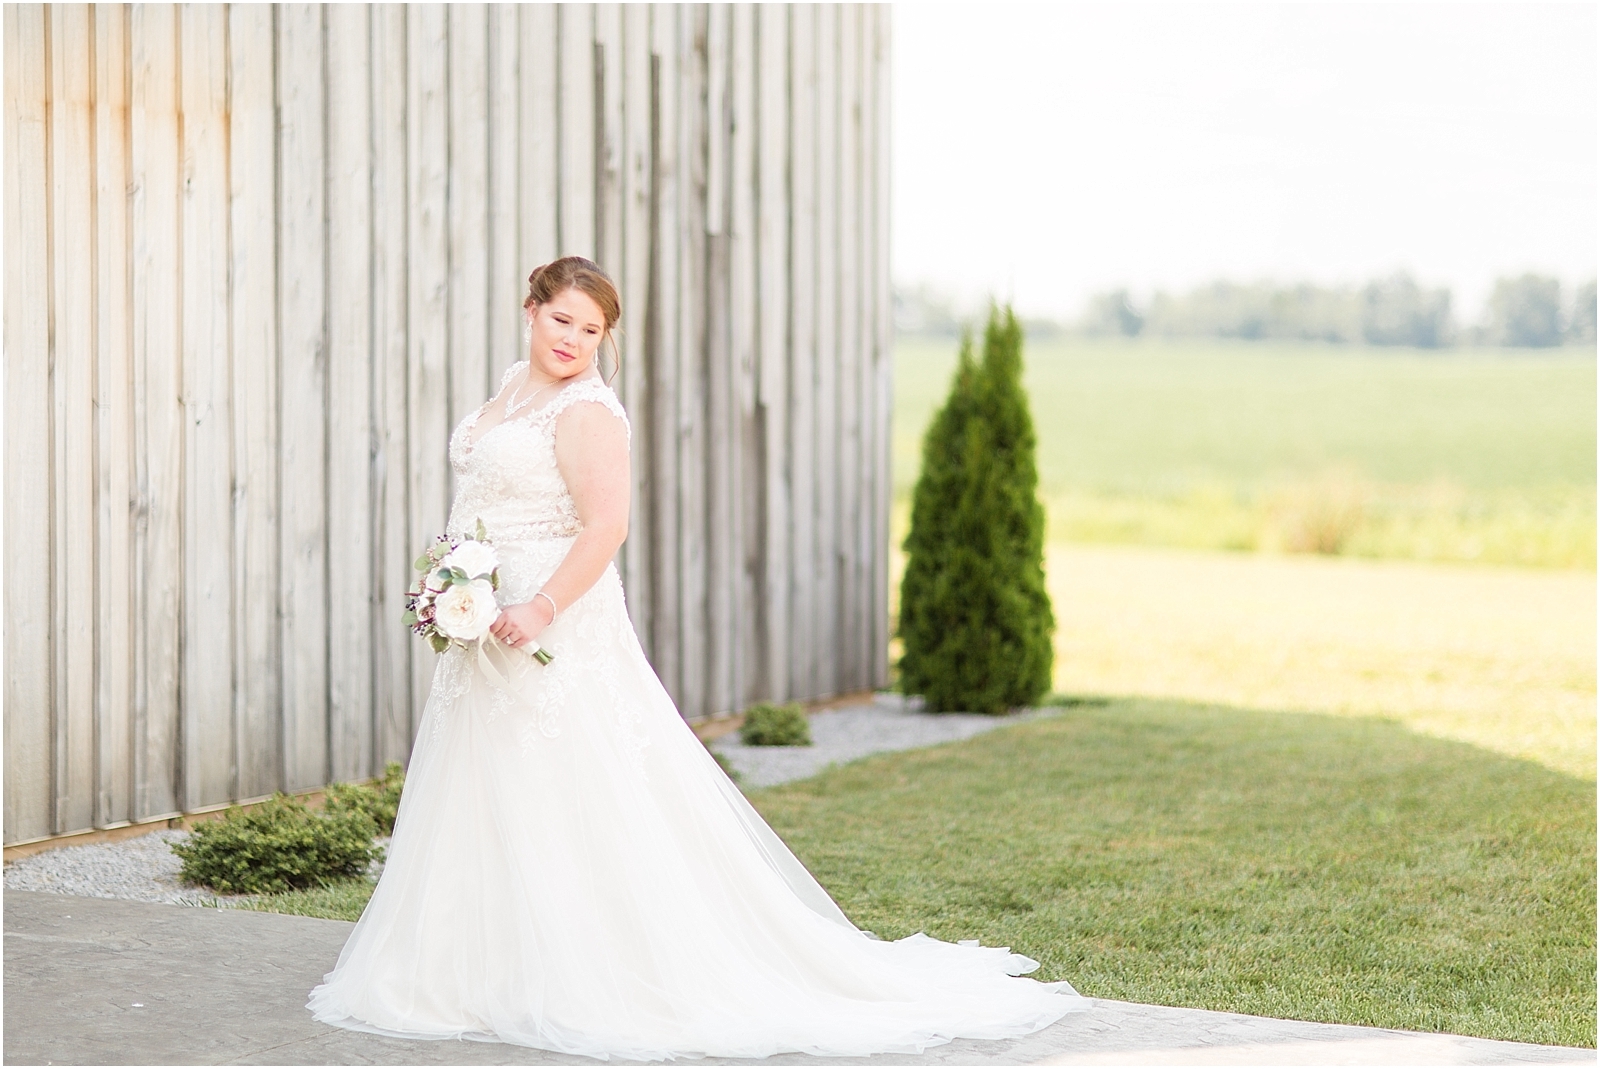 Rachel and Michael | Bret and Brandie Photography | Evansville Wedding Photographers 0020.jpg